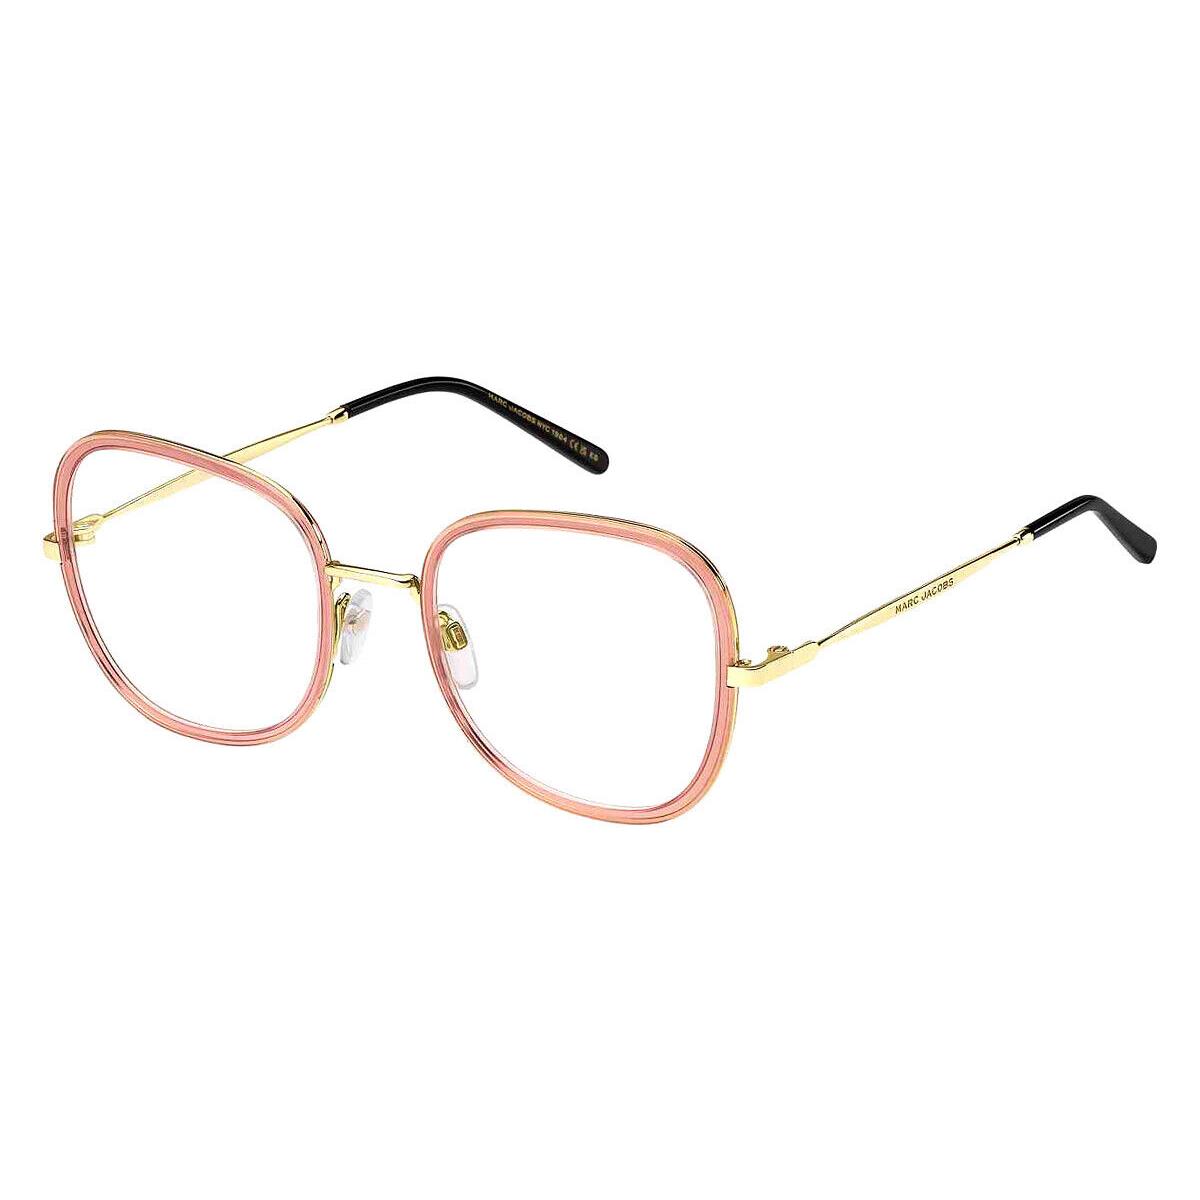 Marc Jacobs Mjb Eyeglasses Women Pink Gold 0S45 53mm